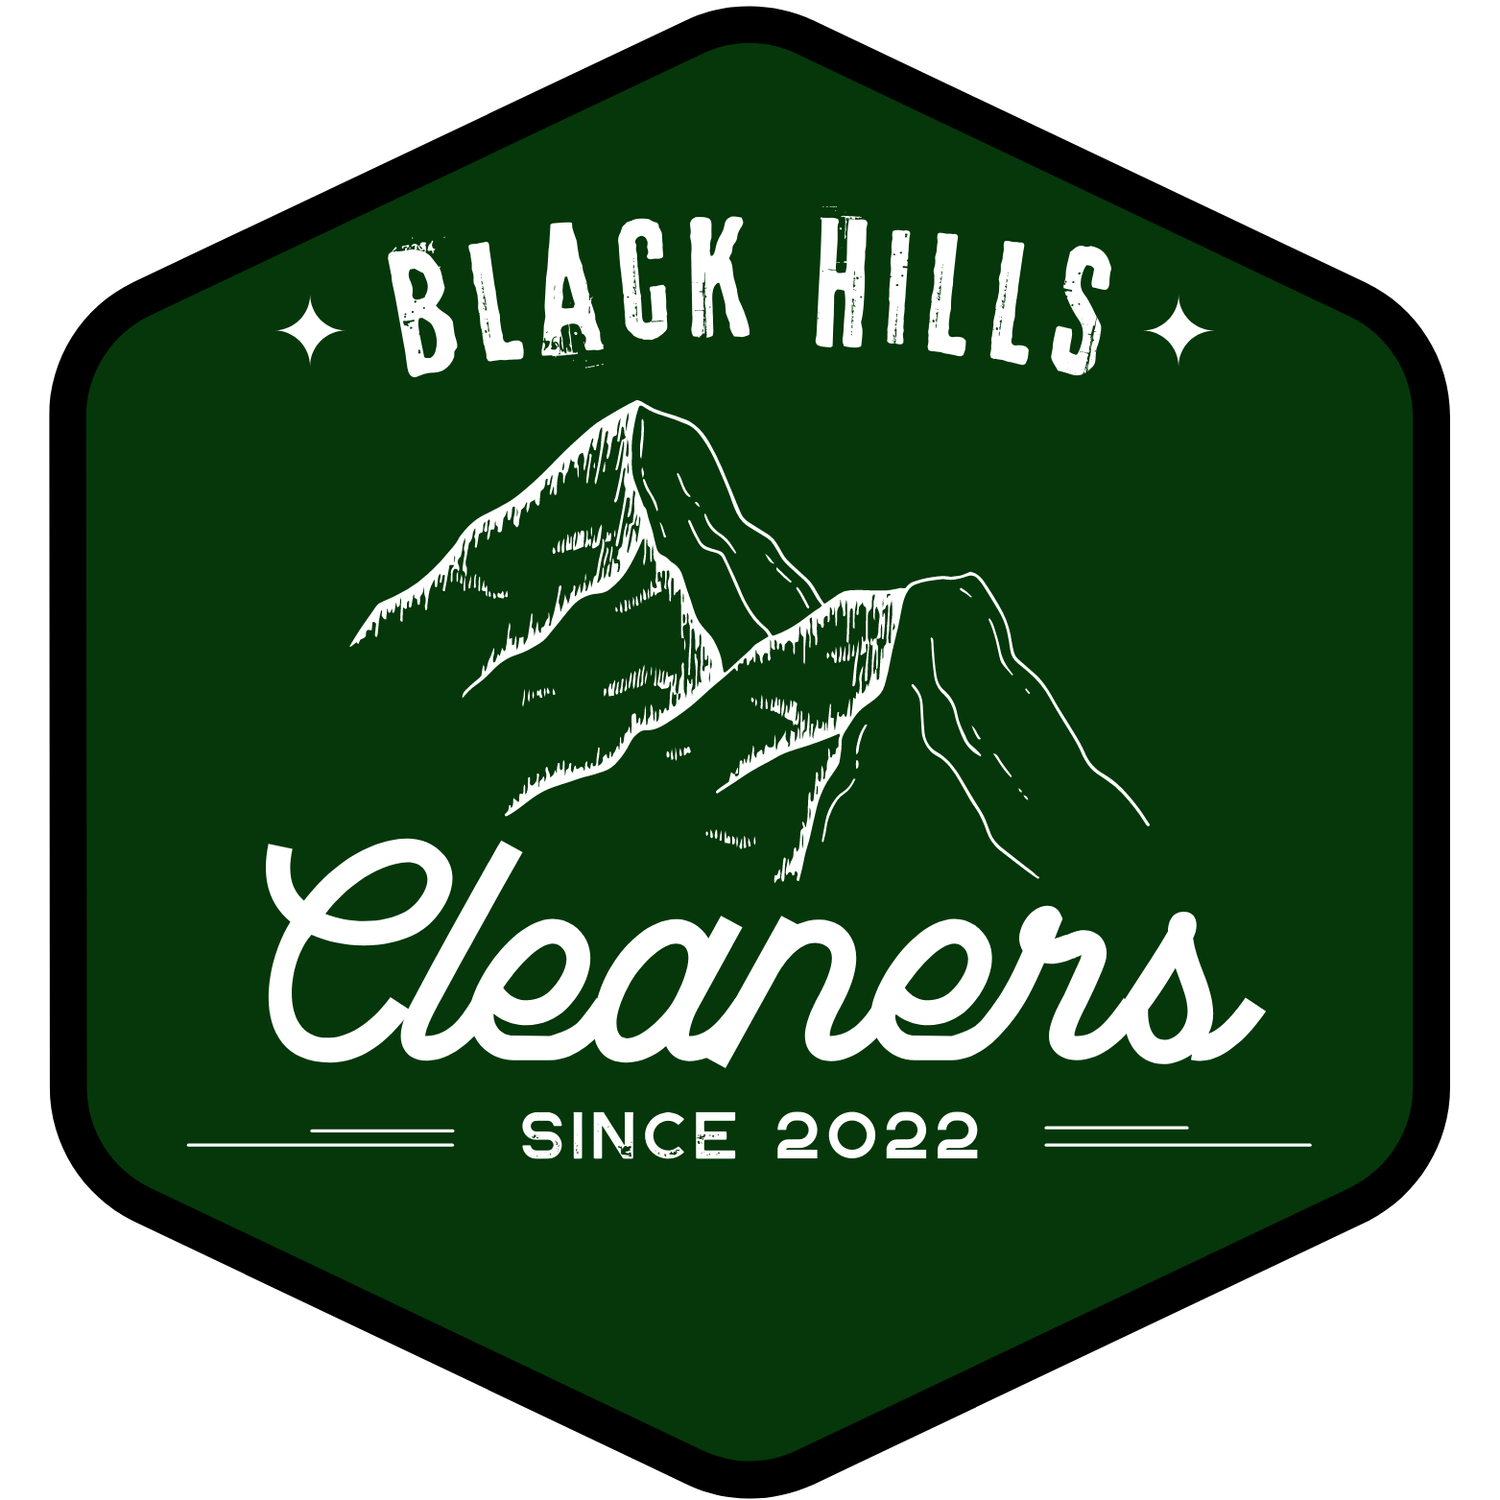 Black Hills Cleaners